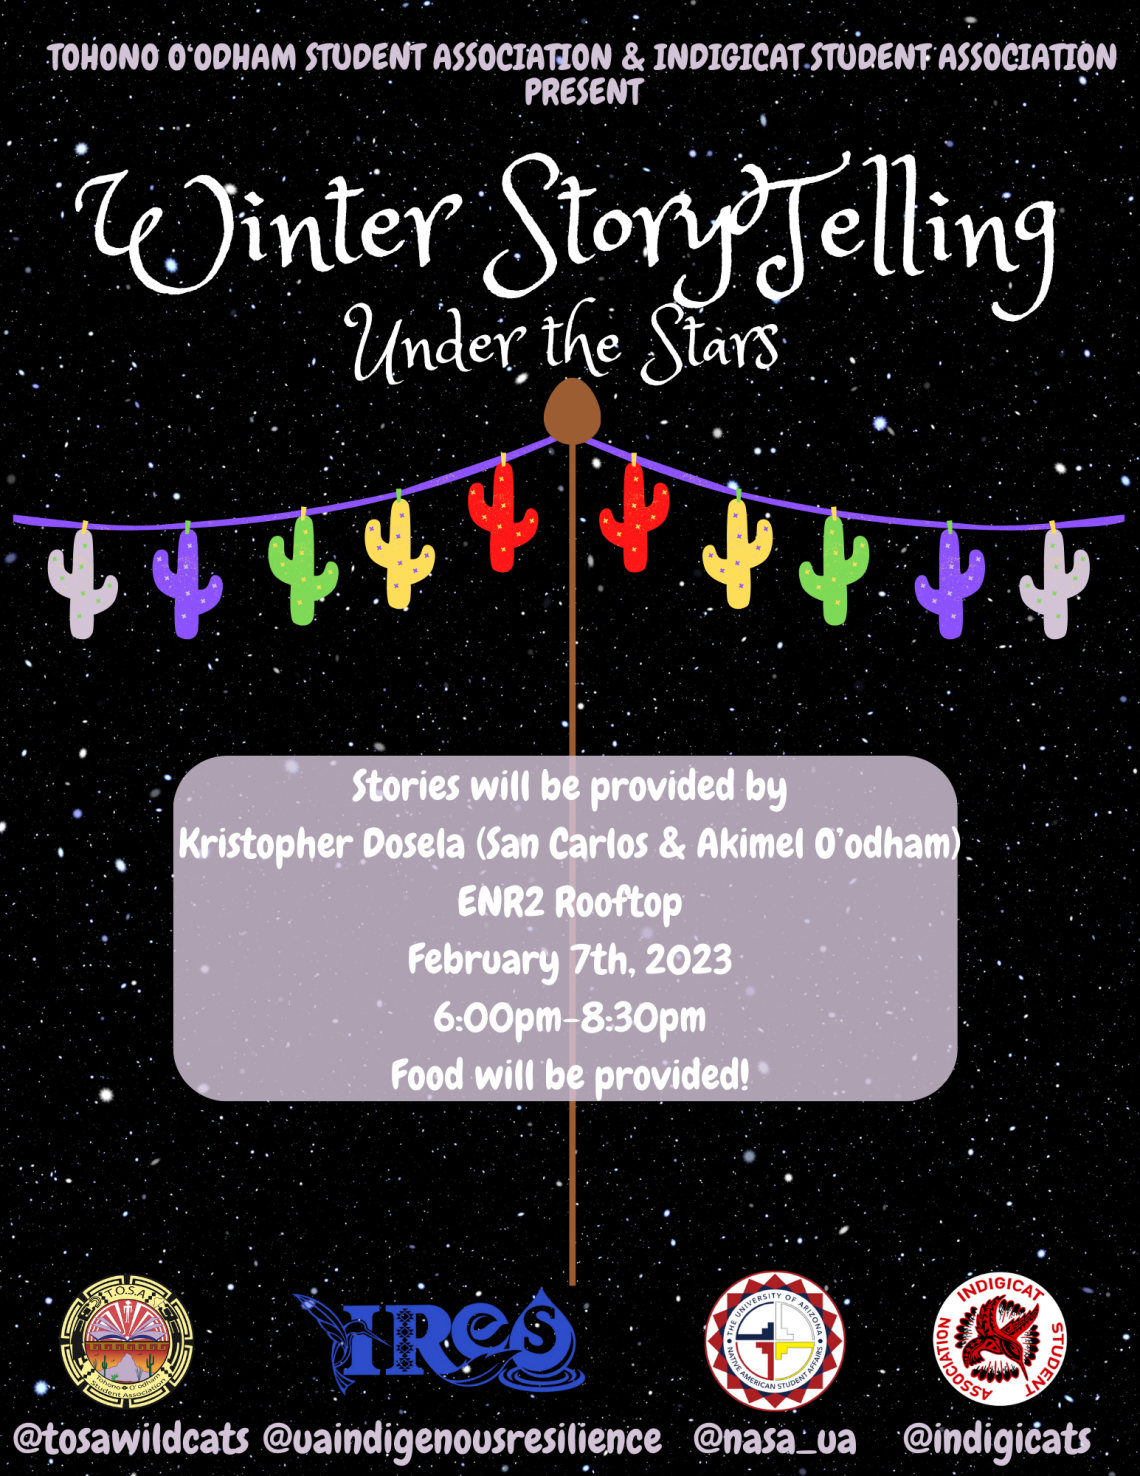 Storytelling under the star (Real Estate Flyer)